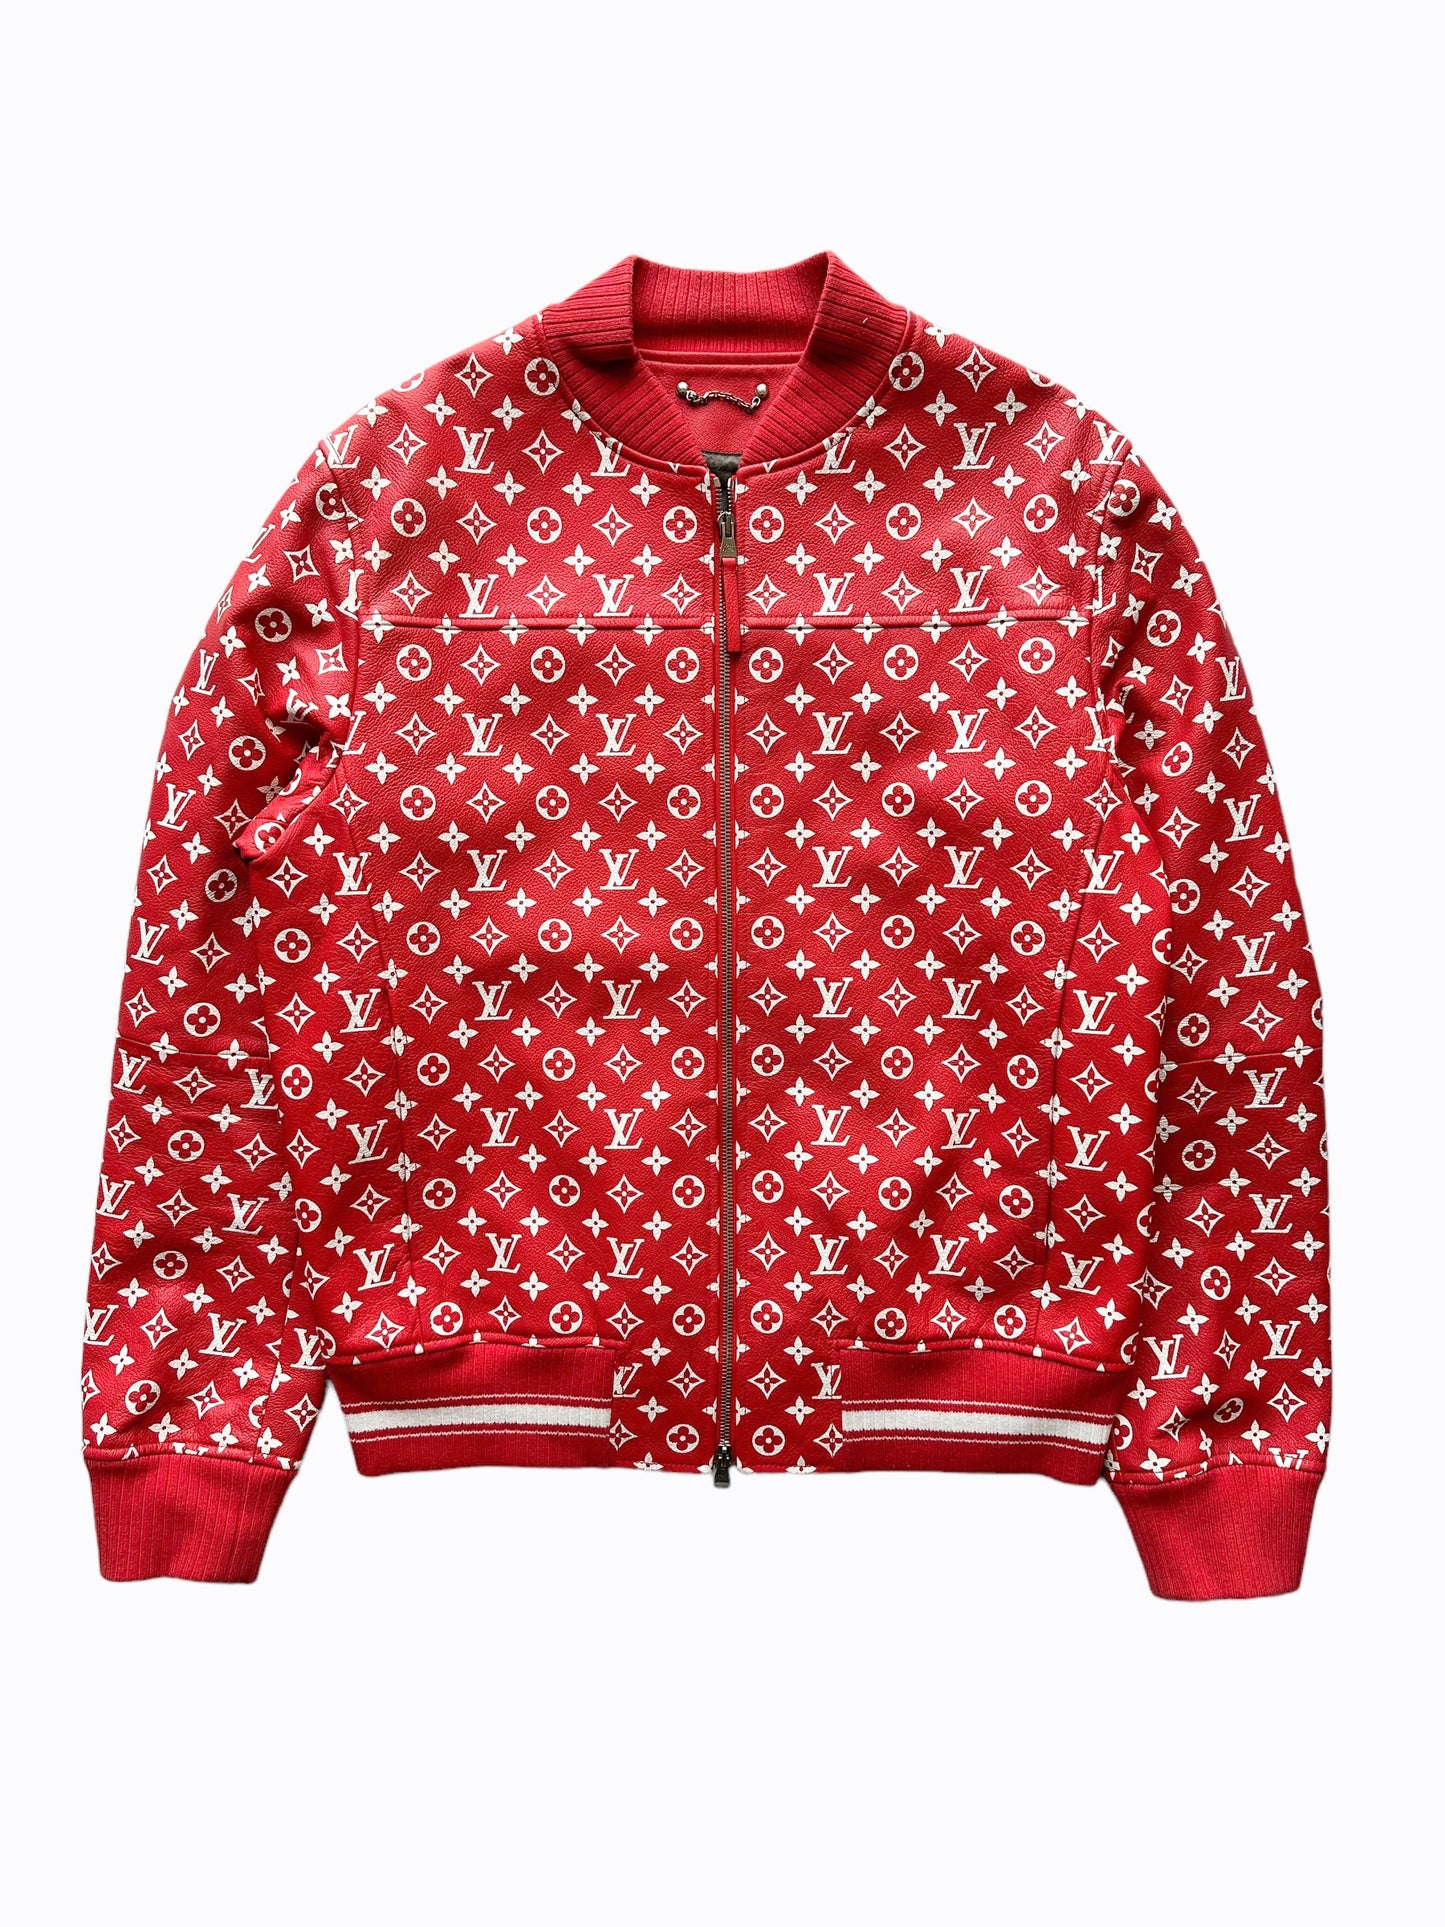 Supreme Louis Vuitton Red Monogram Curve Varsity Jacket Coat Outwear - Shop  trending fashion in USA and EU